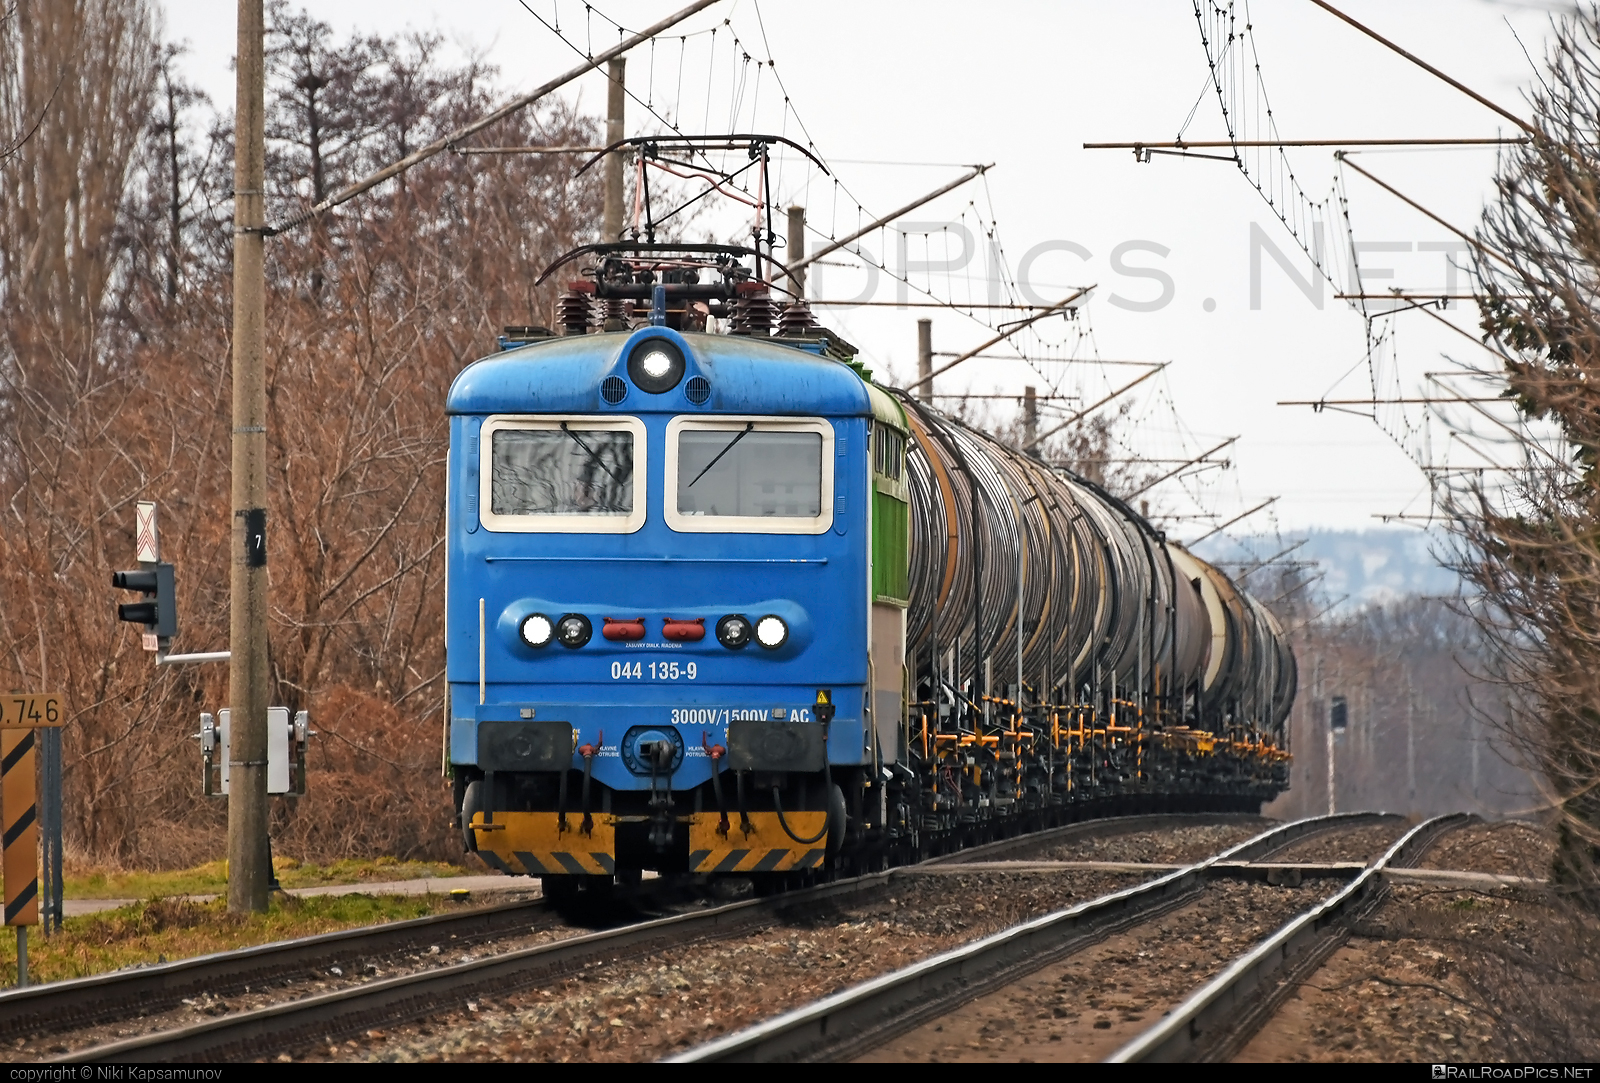 Škoda 73E - 044 135-9 operated by Railtrans International, s.r.o #RailtransInternational #kesselwagen #locomotive242 #plechac #rti #skoda #skoda73e #tankwagon